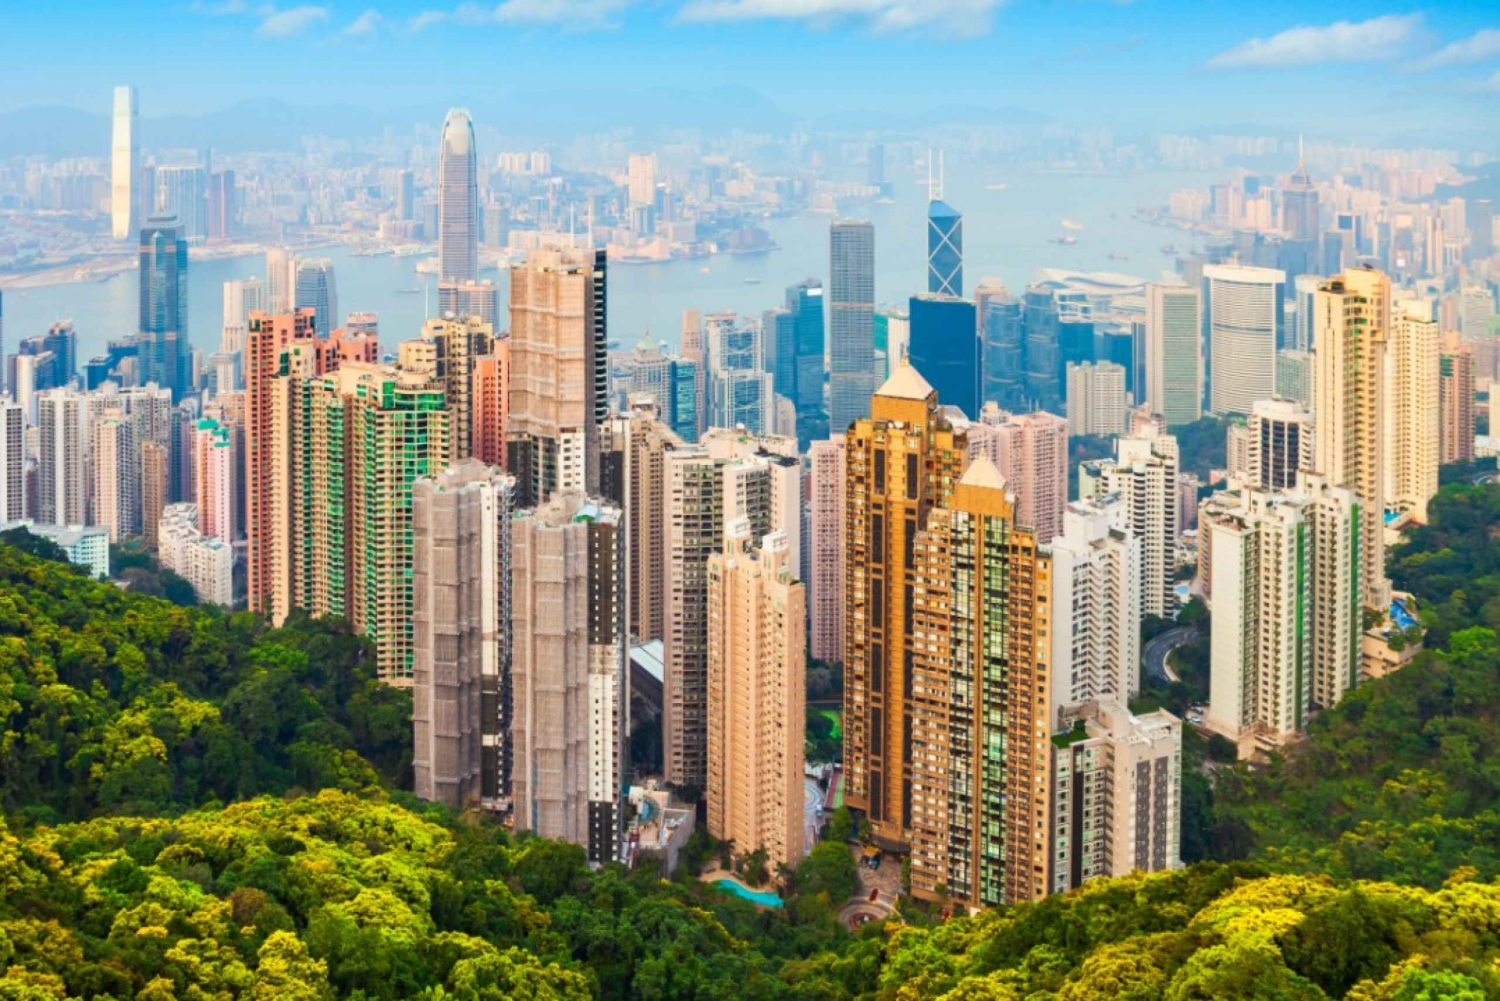 Hong Kong: Victoria Peak Unveiled zelf begeleide audiotour